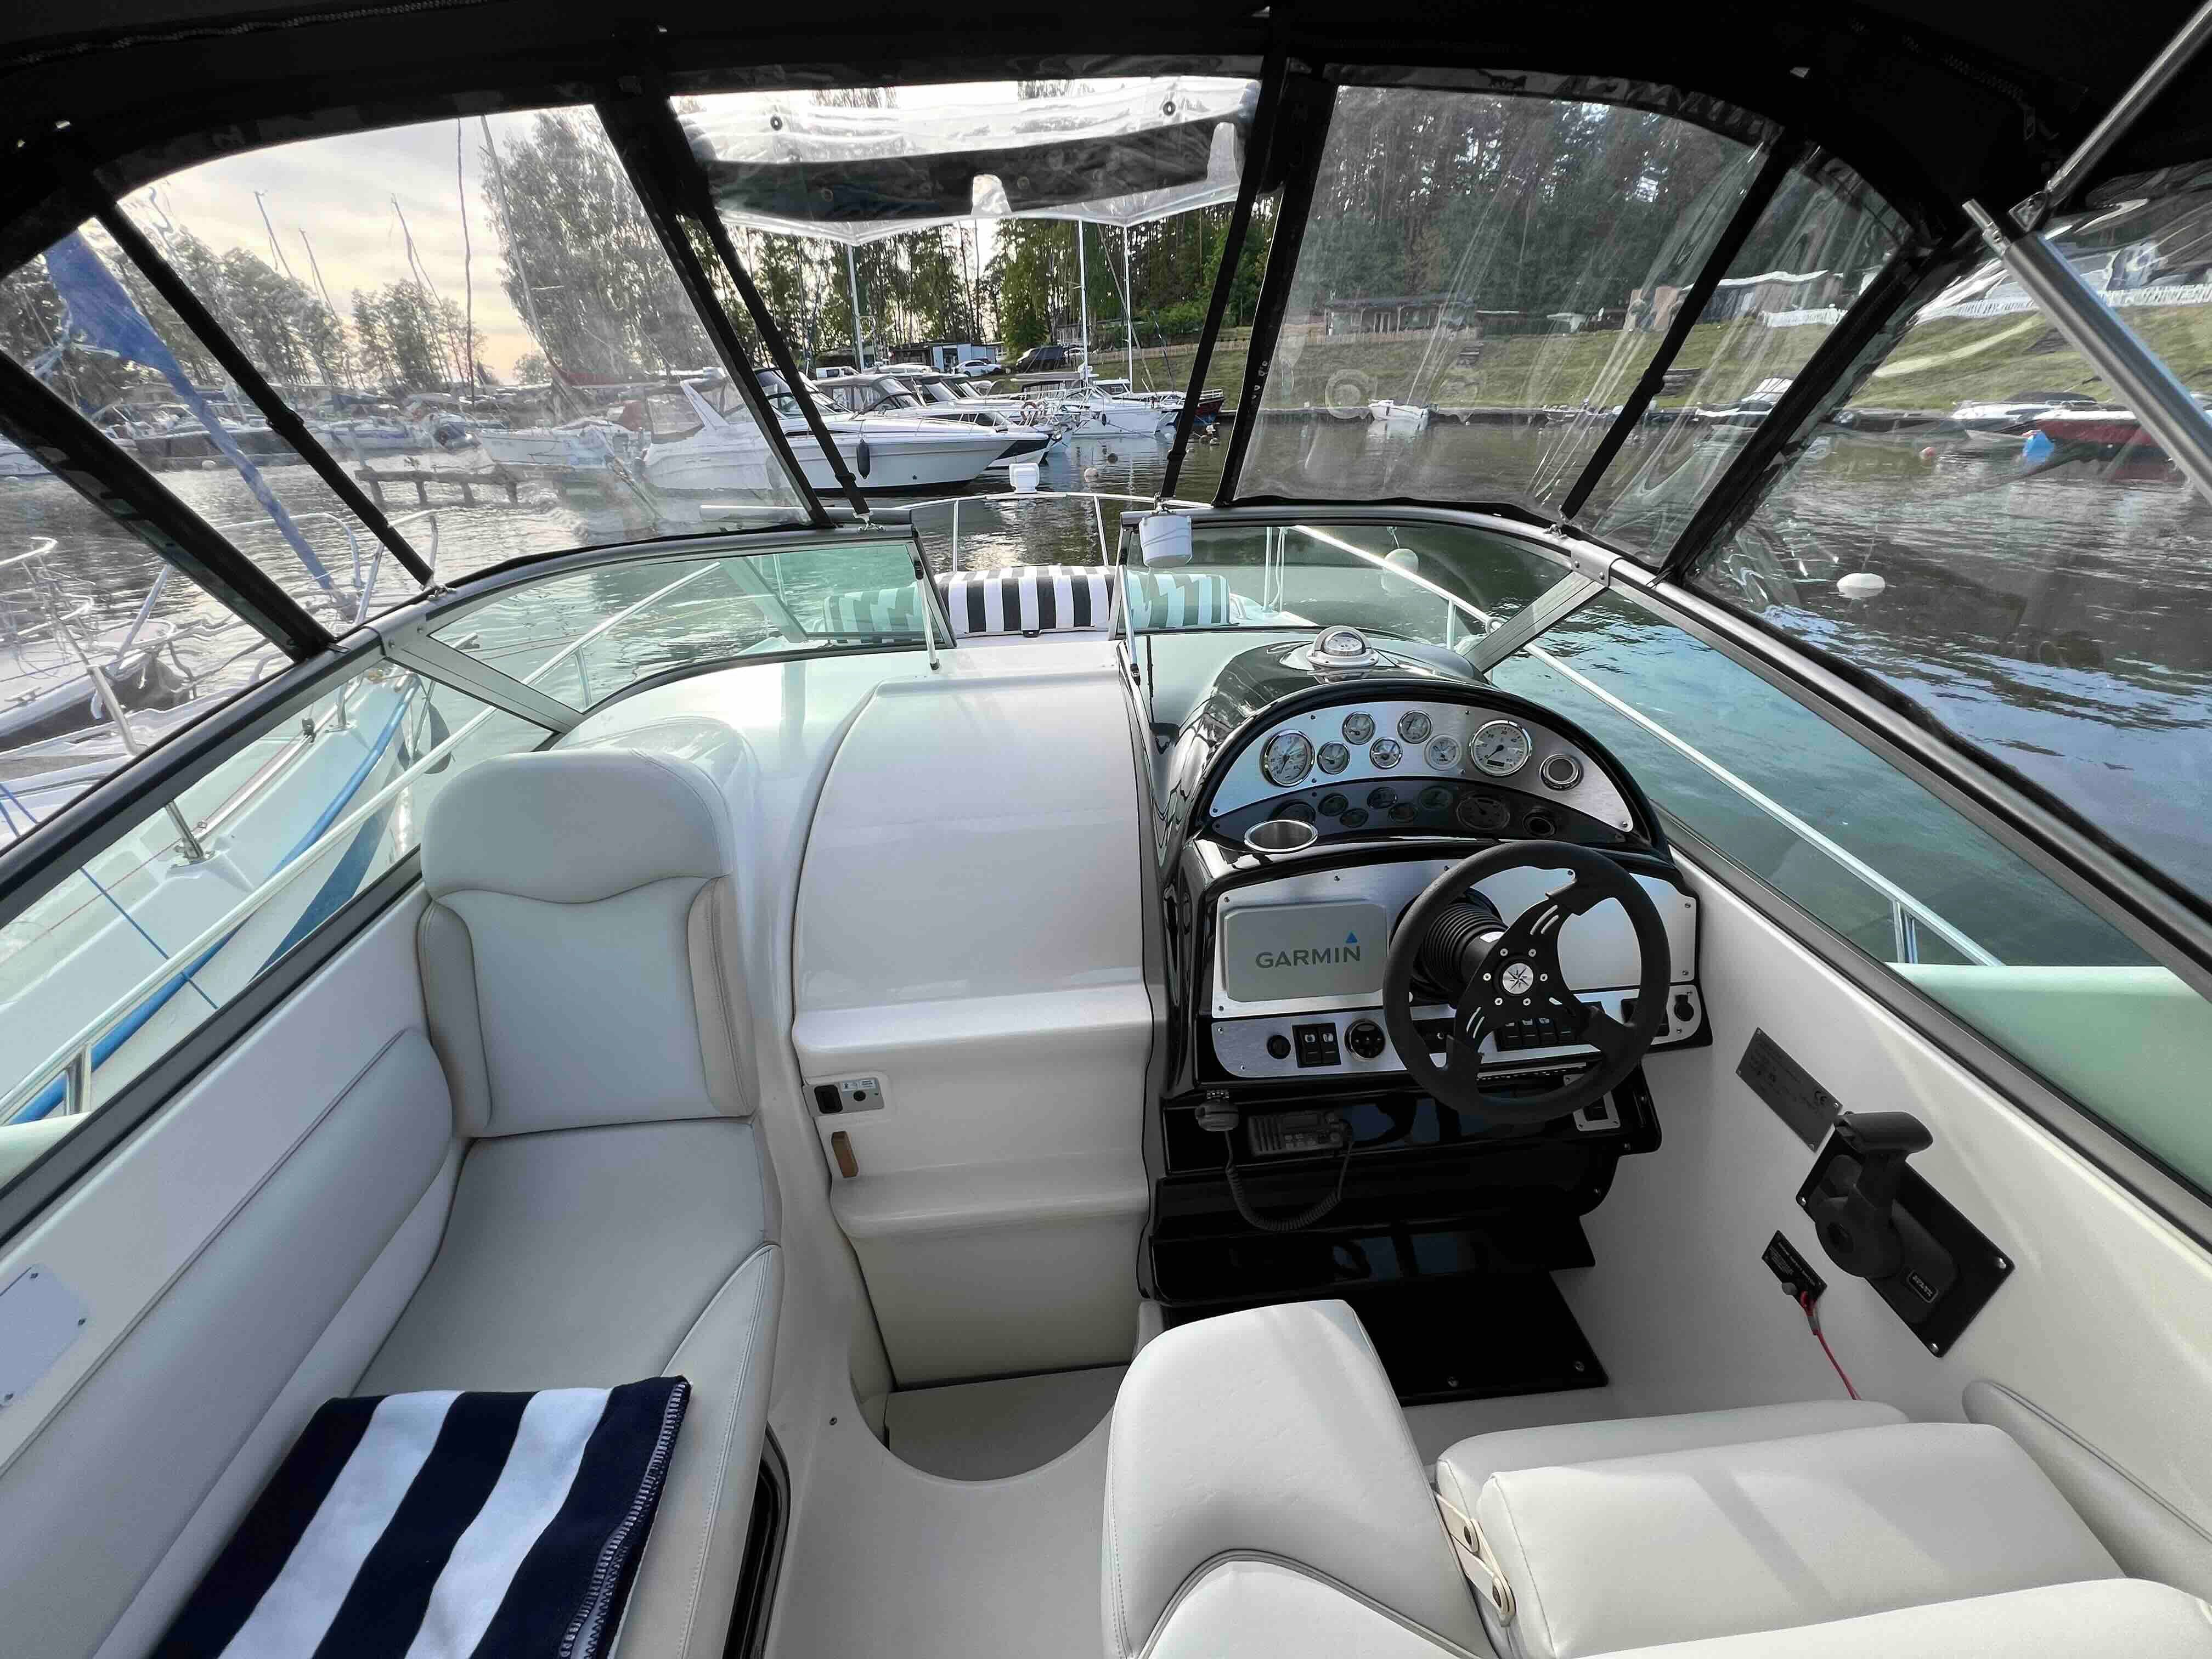 Jacht łódz motorowodna Larson 275 Cabrio, 2012